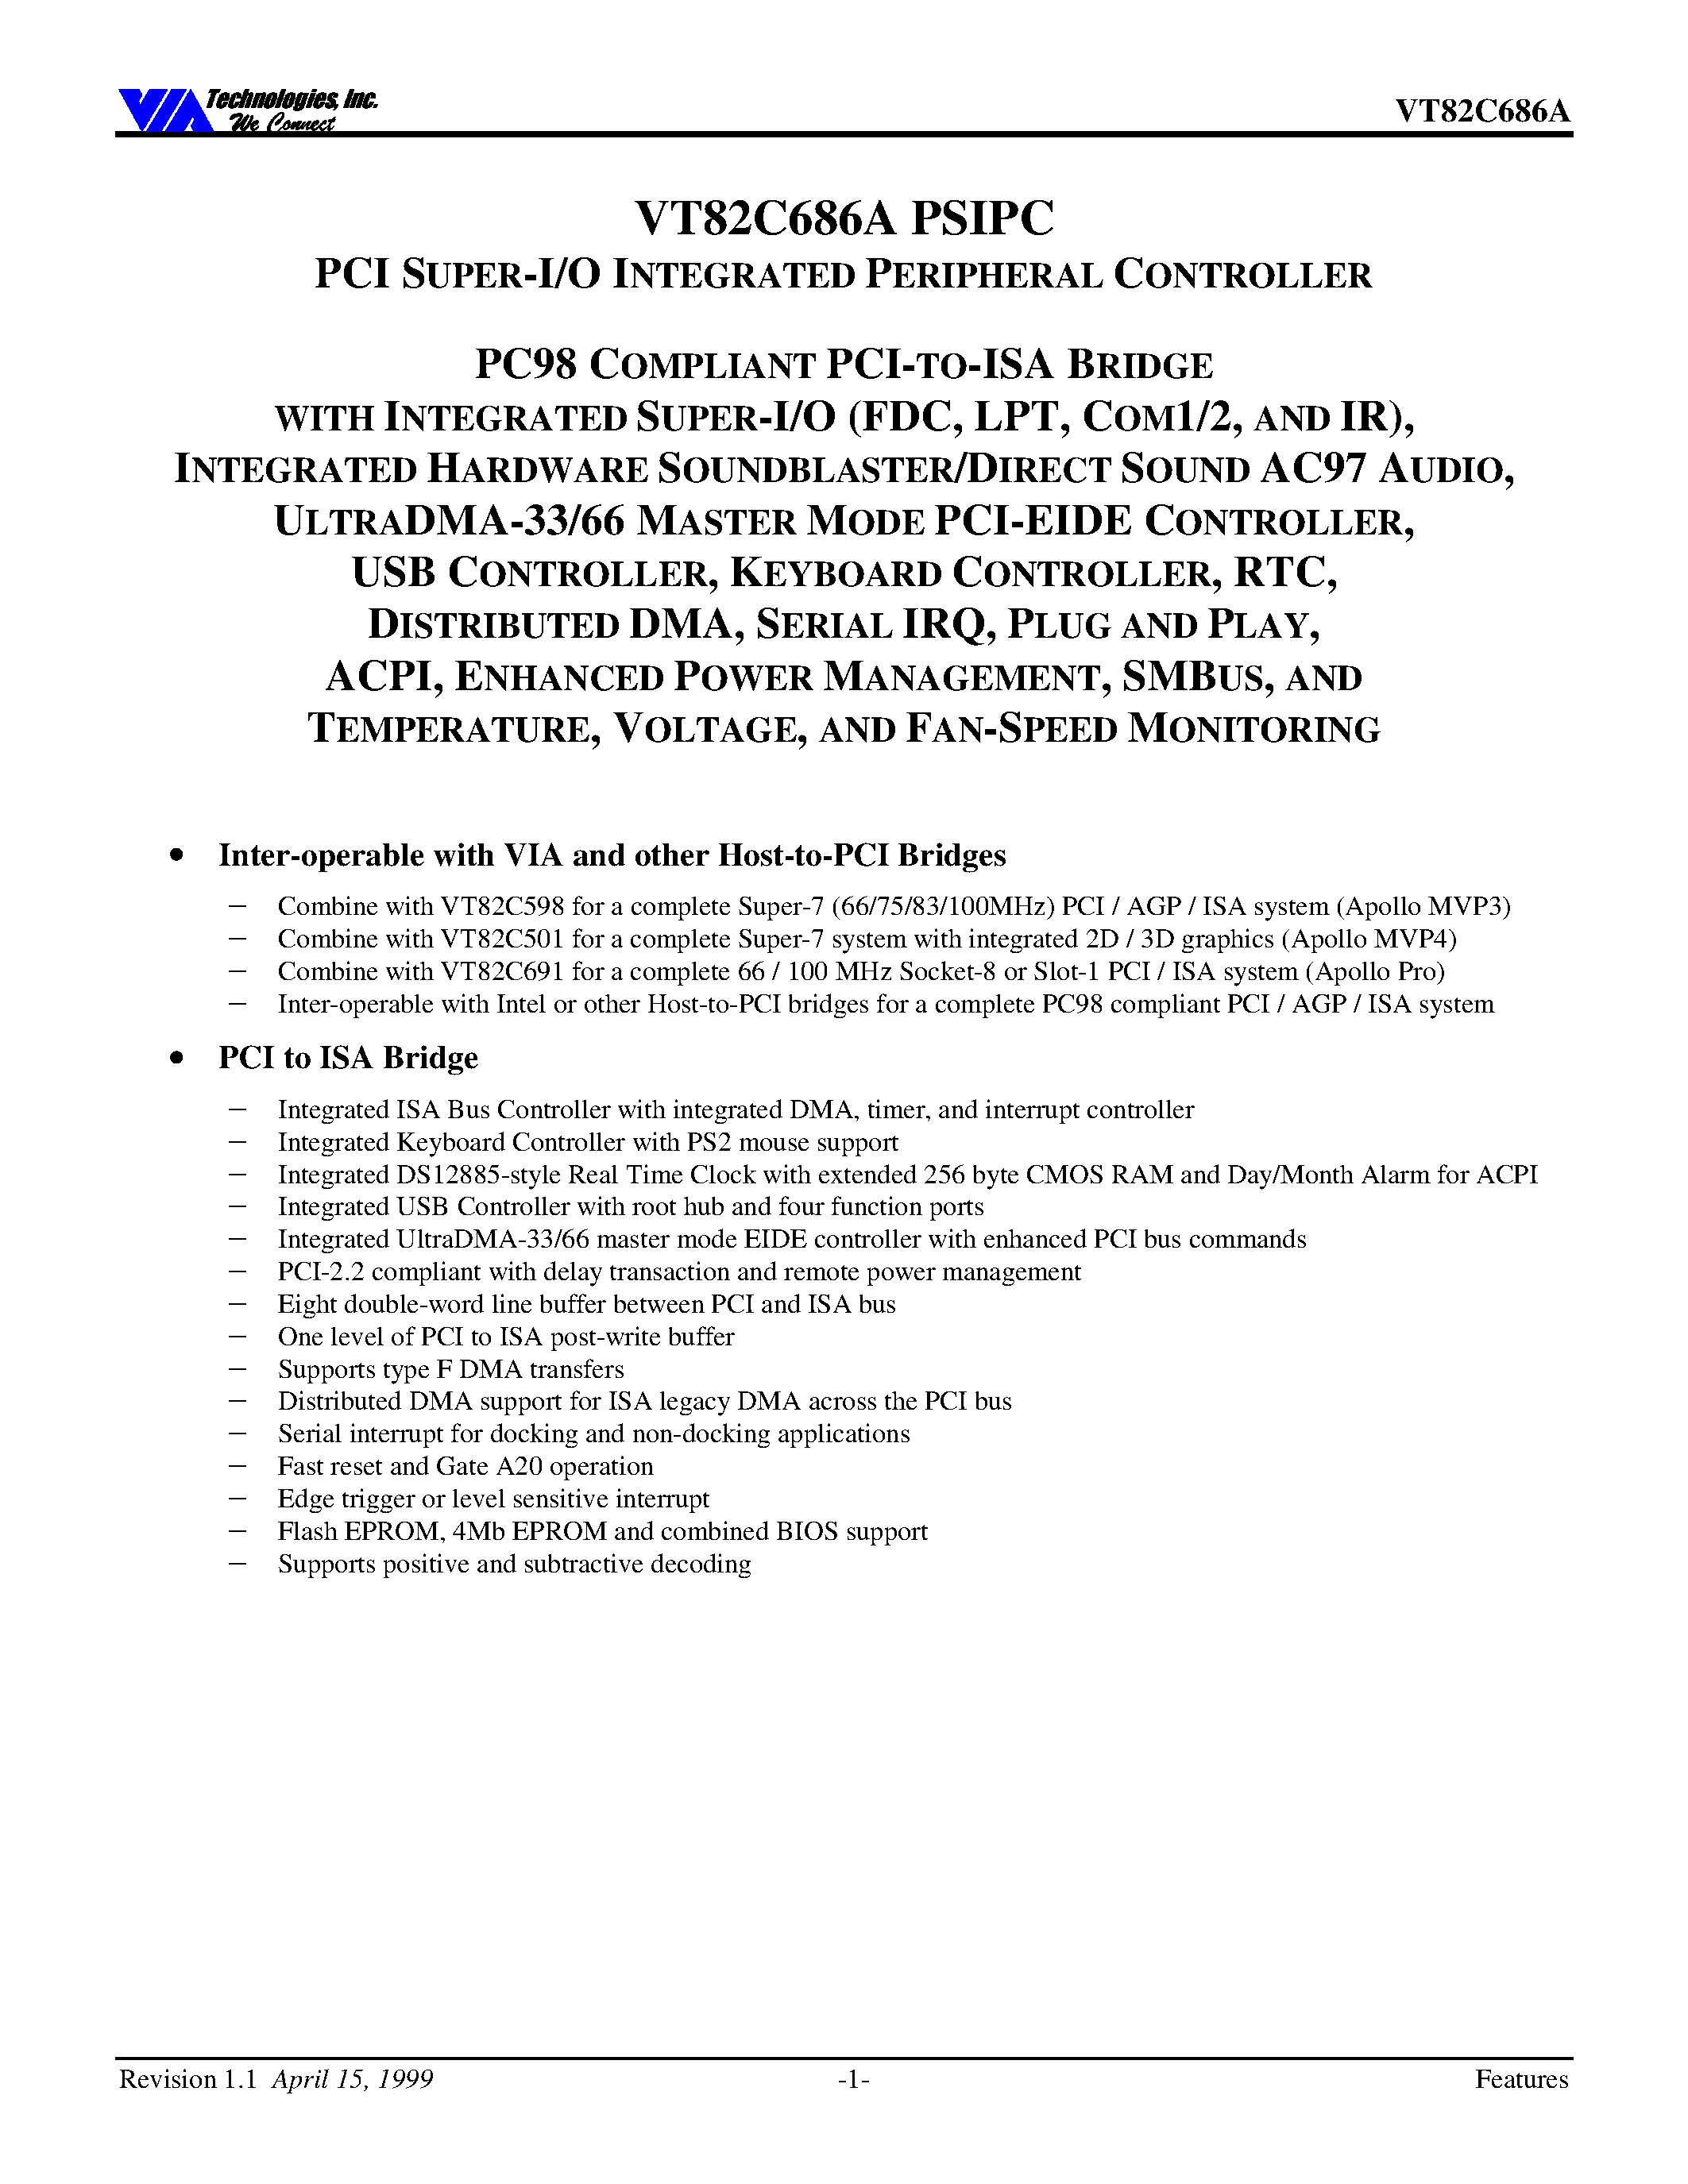 Даташит VT82C686A - PCI SUPER-I/O INTEGRATED PERIPHERAL CONTROLLER страница 1